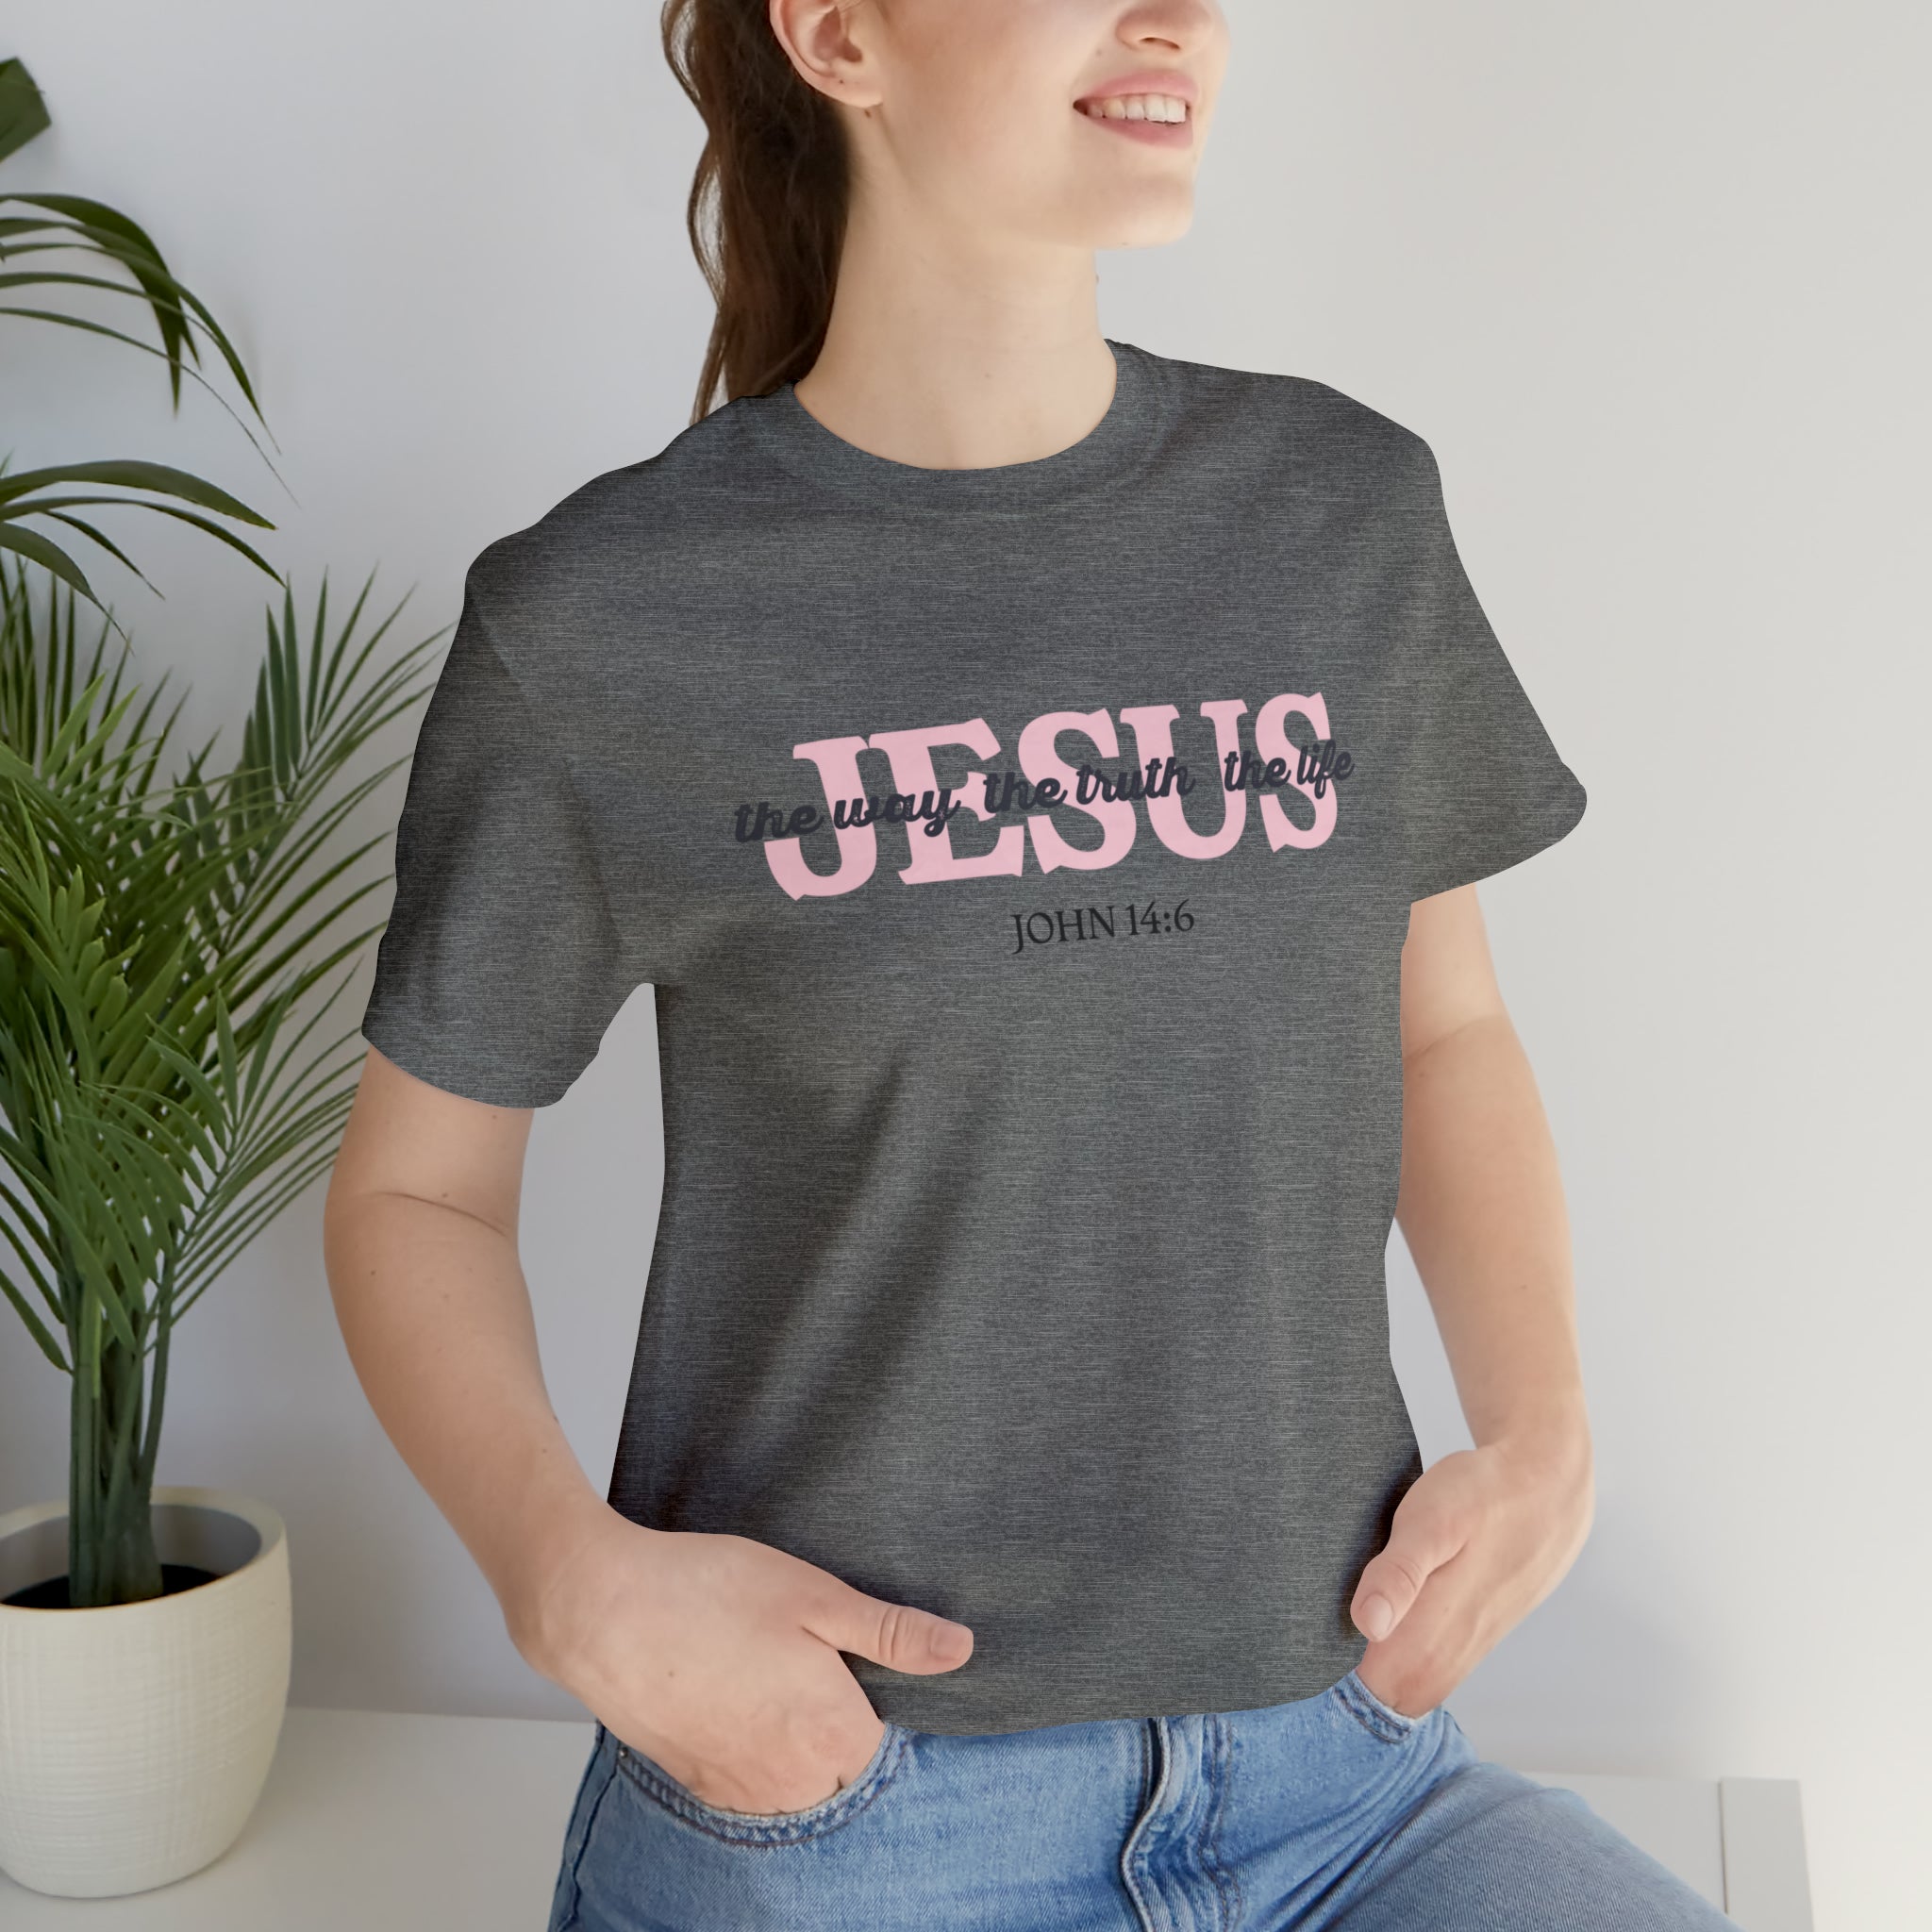 "Jesus is the way" Bella Canvas Unisex Jersey Short Sleeve Tee